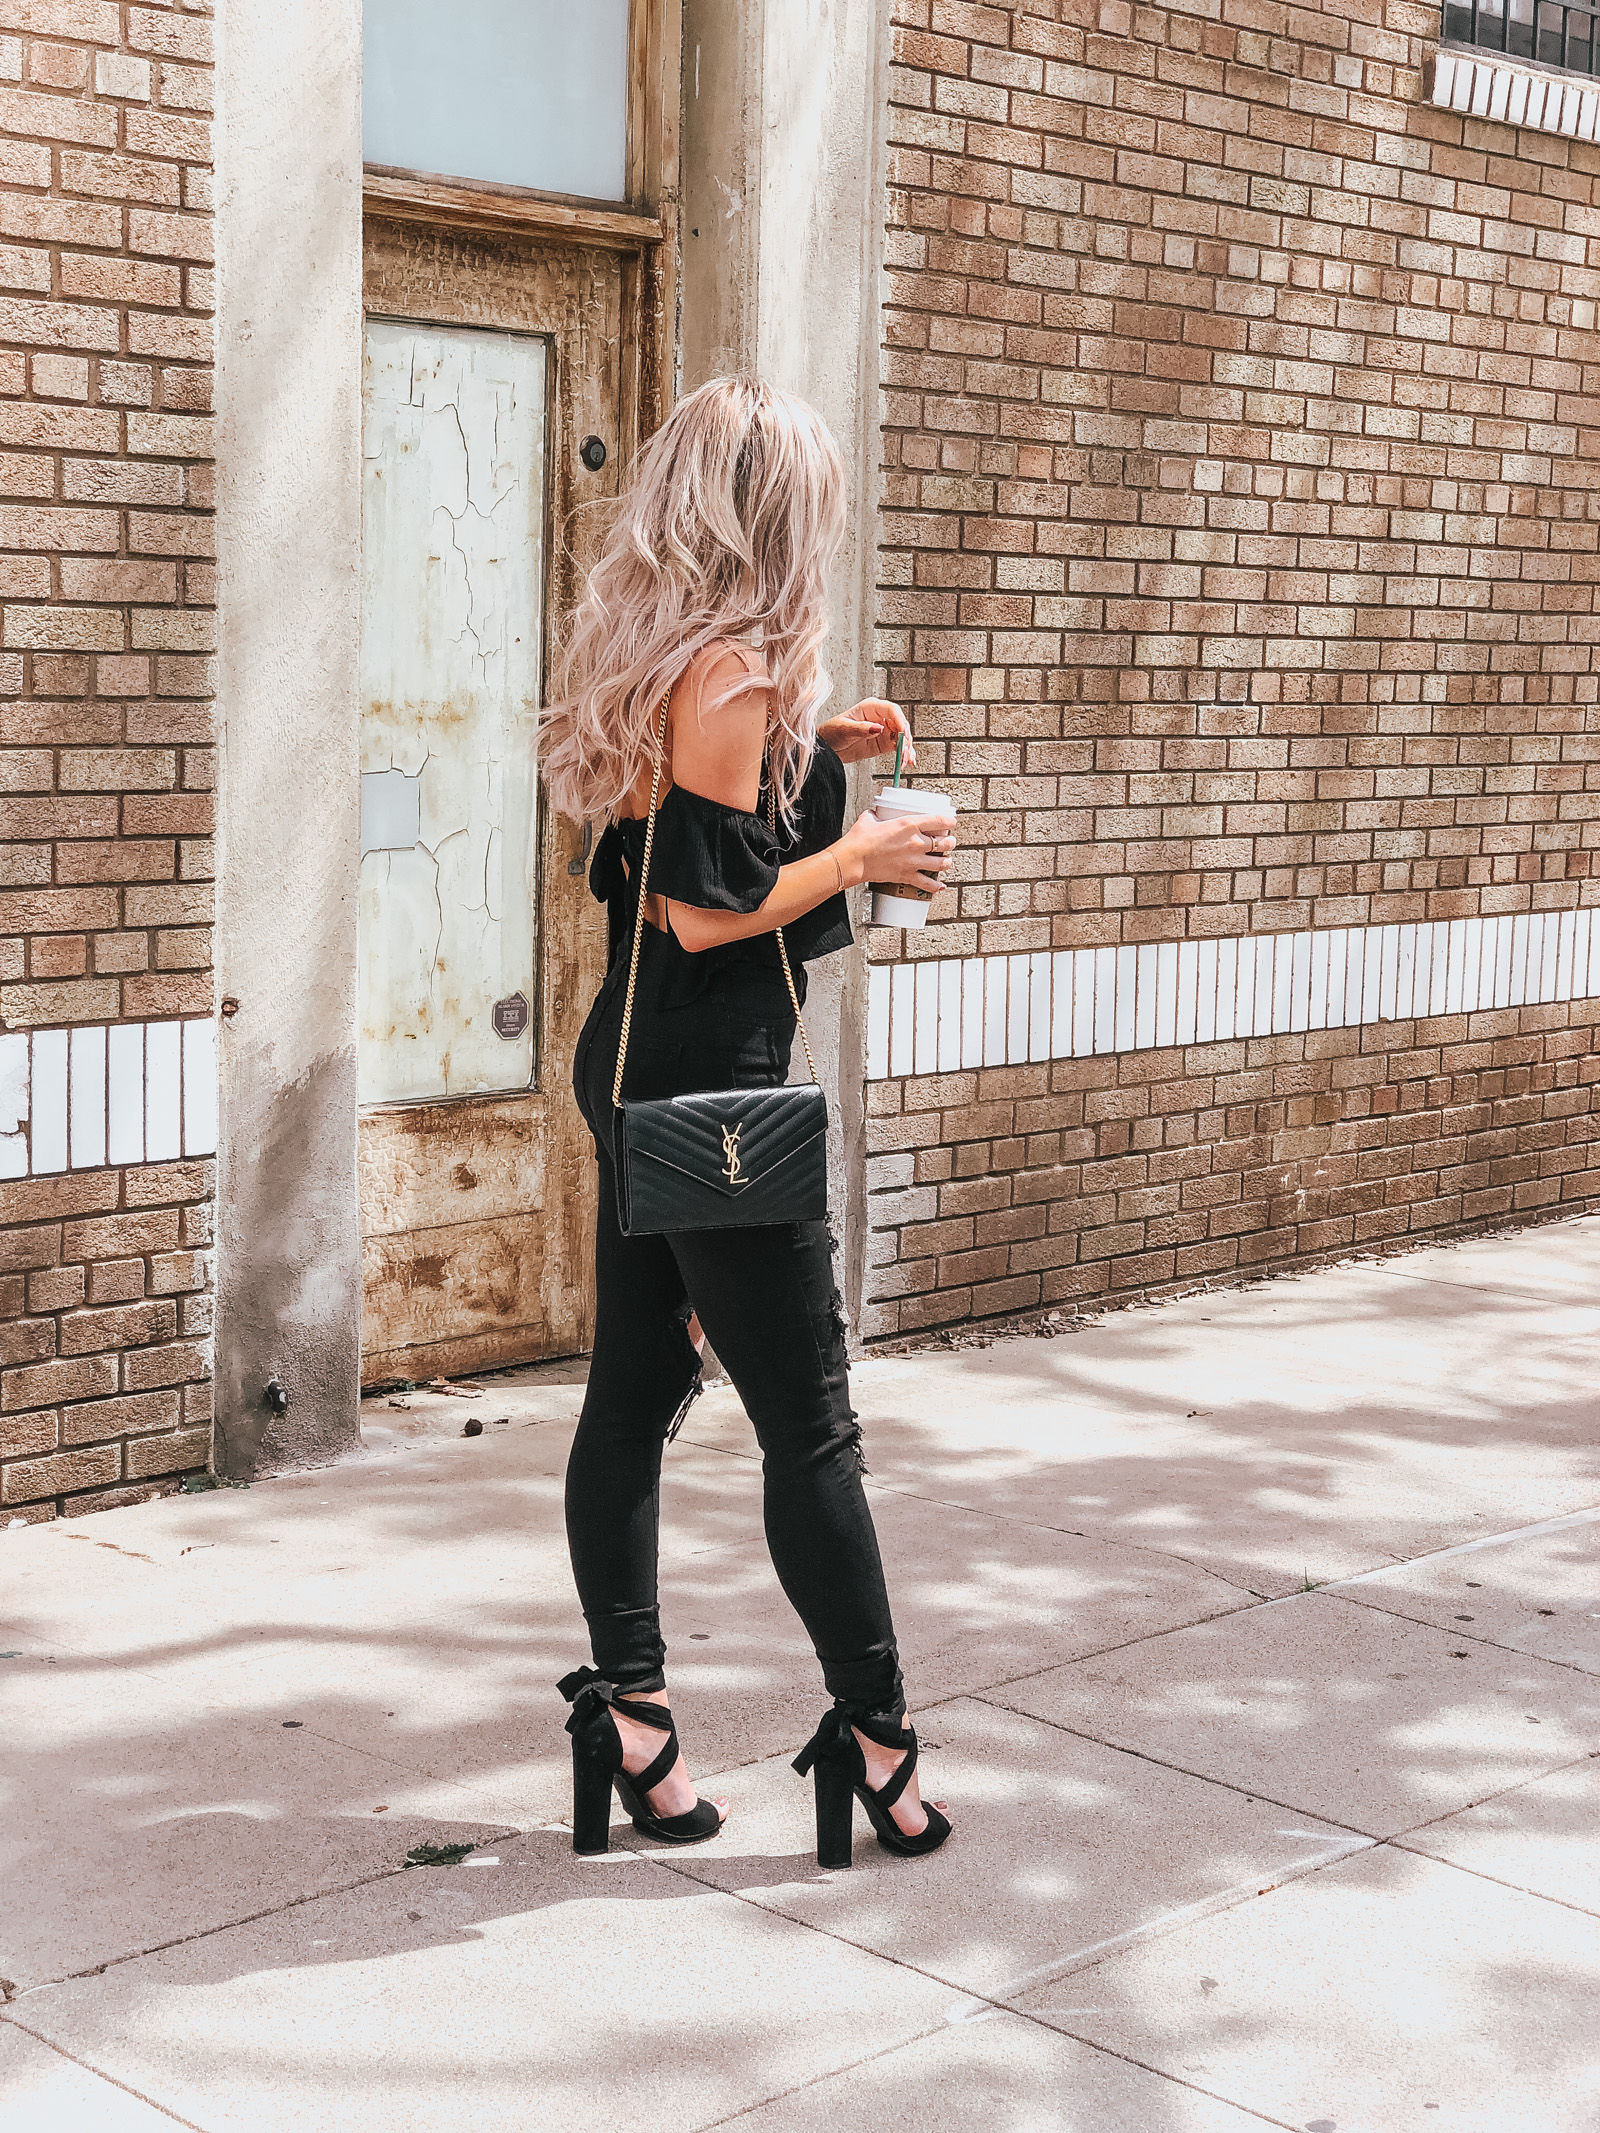 Black Ripped Jeans | Black Backless Summer Top | Black YSL Bag | Blondie in the City by Hayley Larue